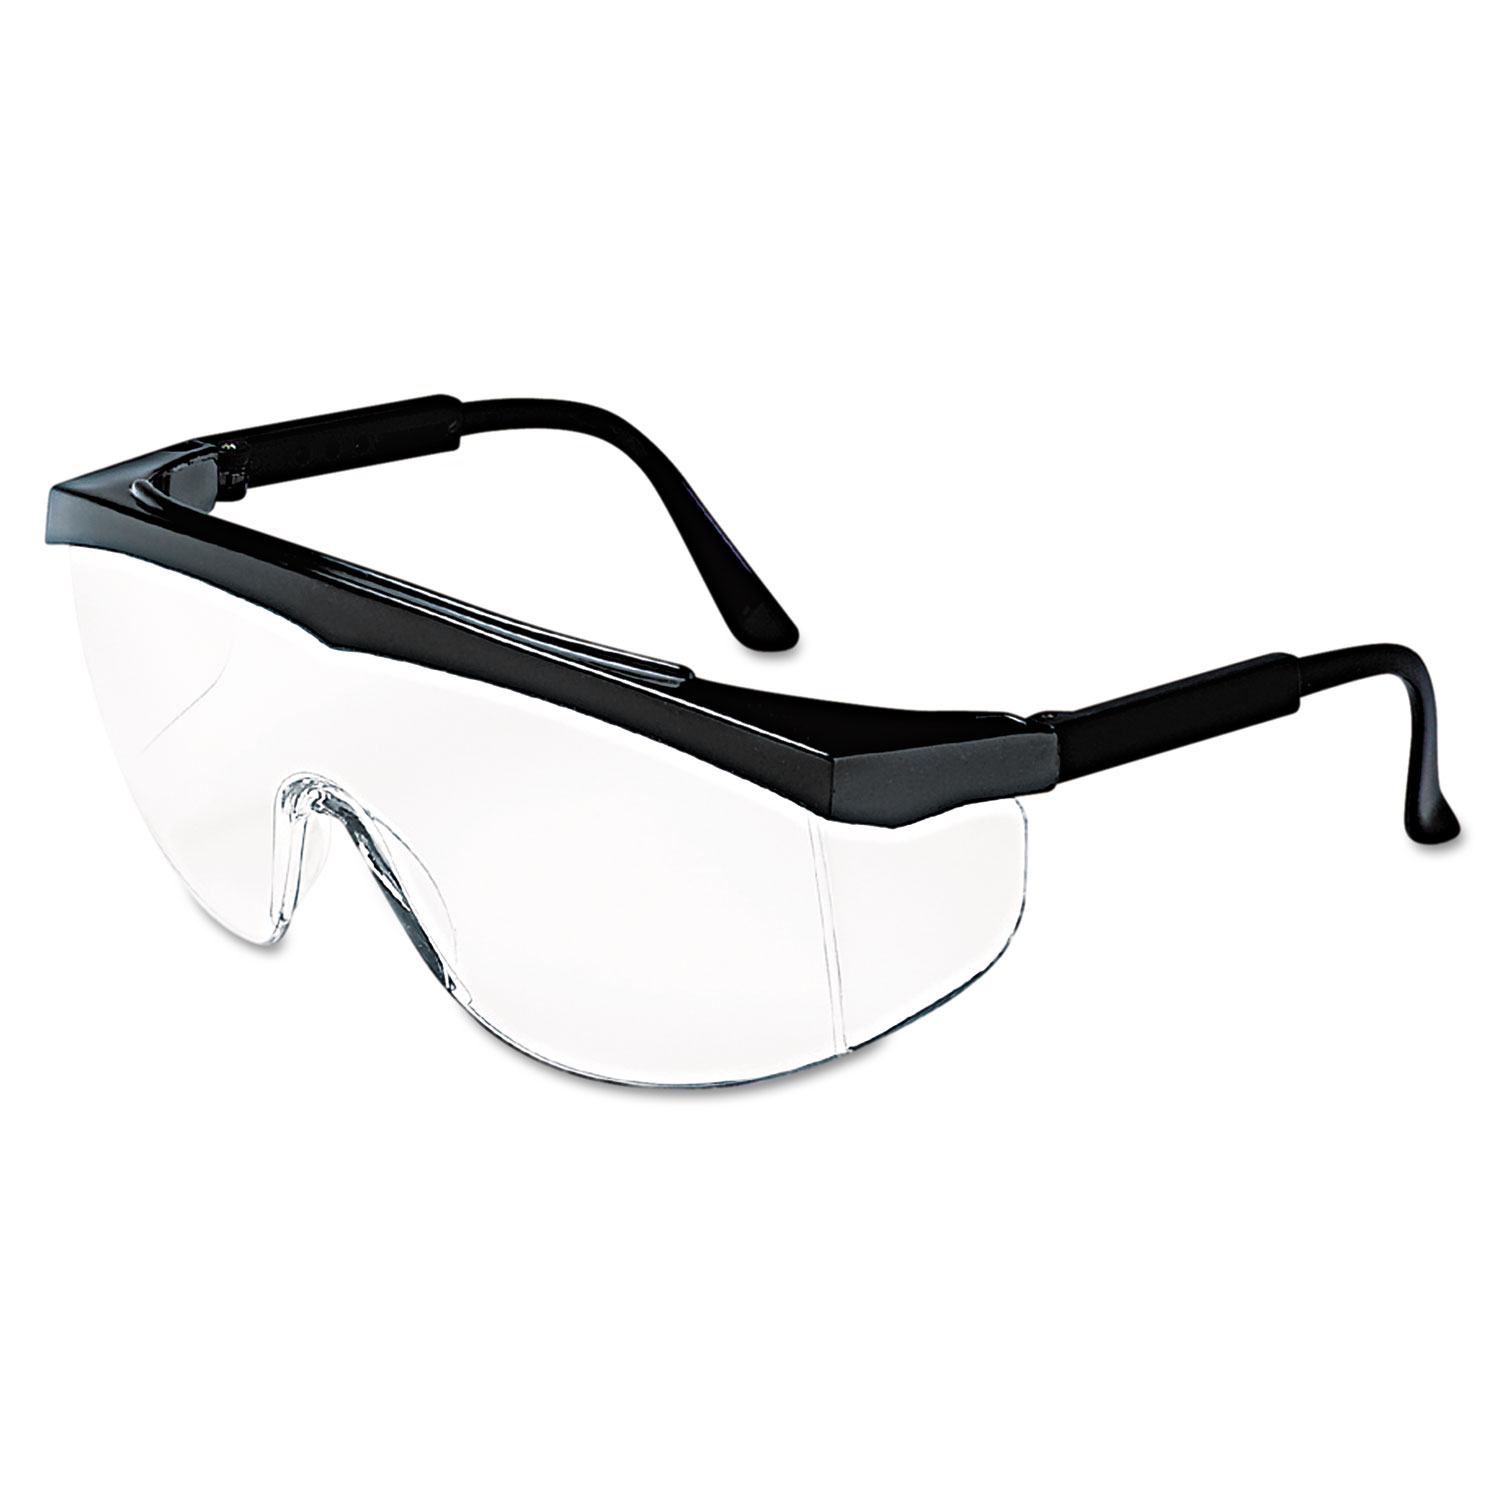  MCR Safety SS110 Stratos Safety Glasses, Black Frame, Clear Lens (CRWSS110) 